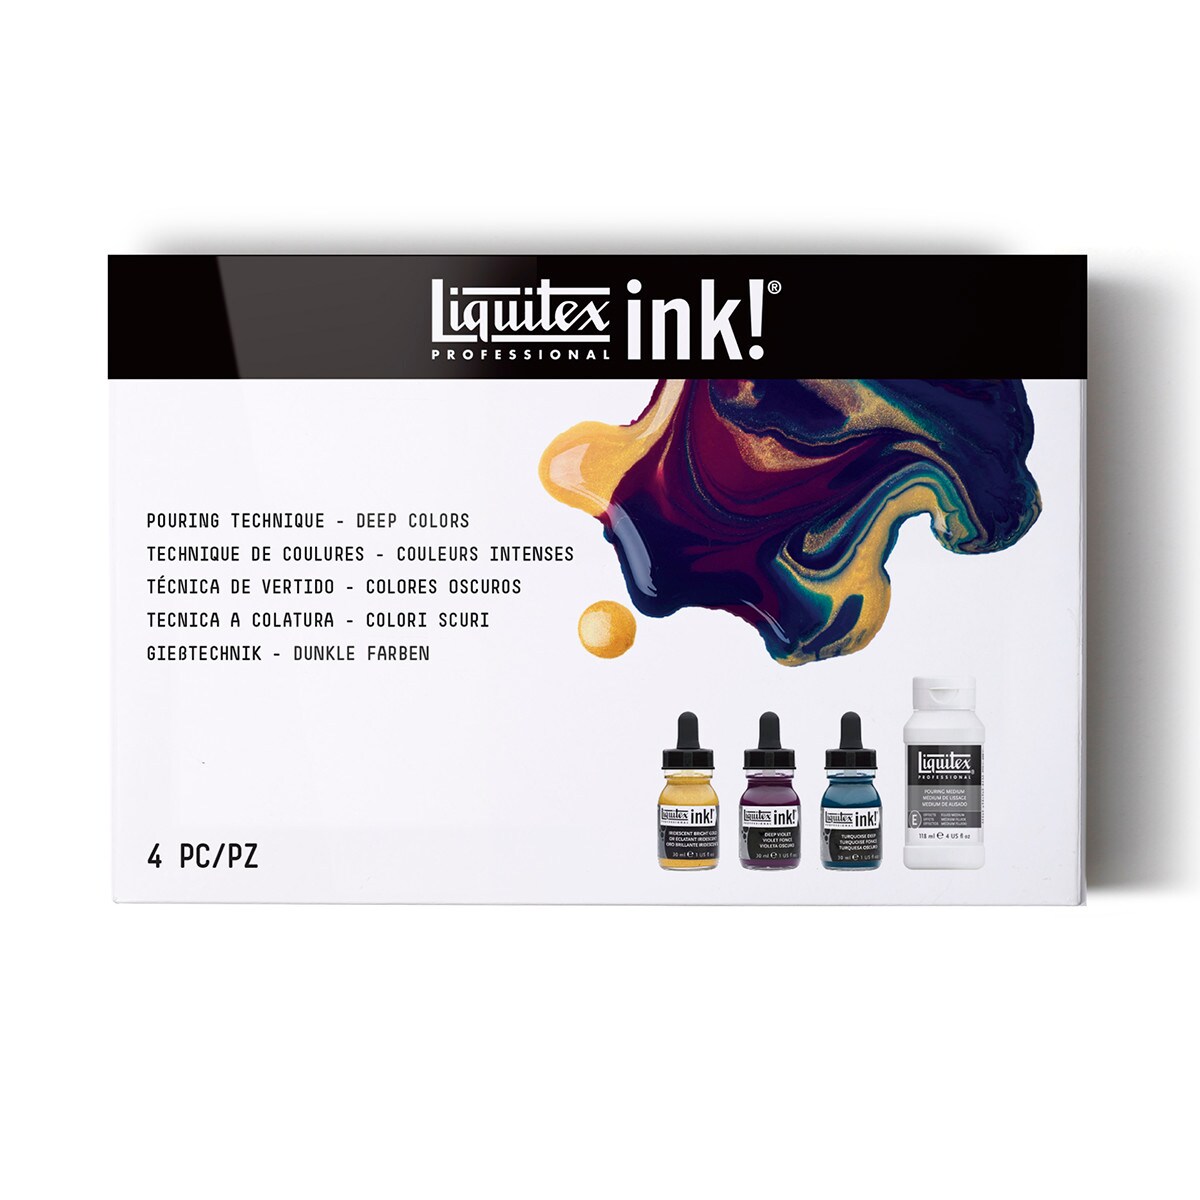 Daler-Rowney® FW Neon Acrylic Ink Set